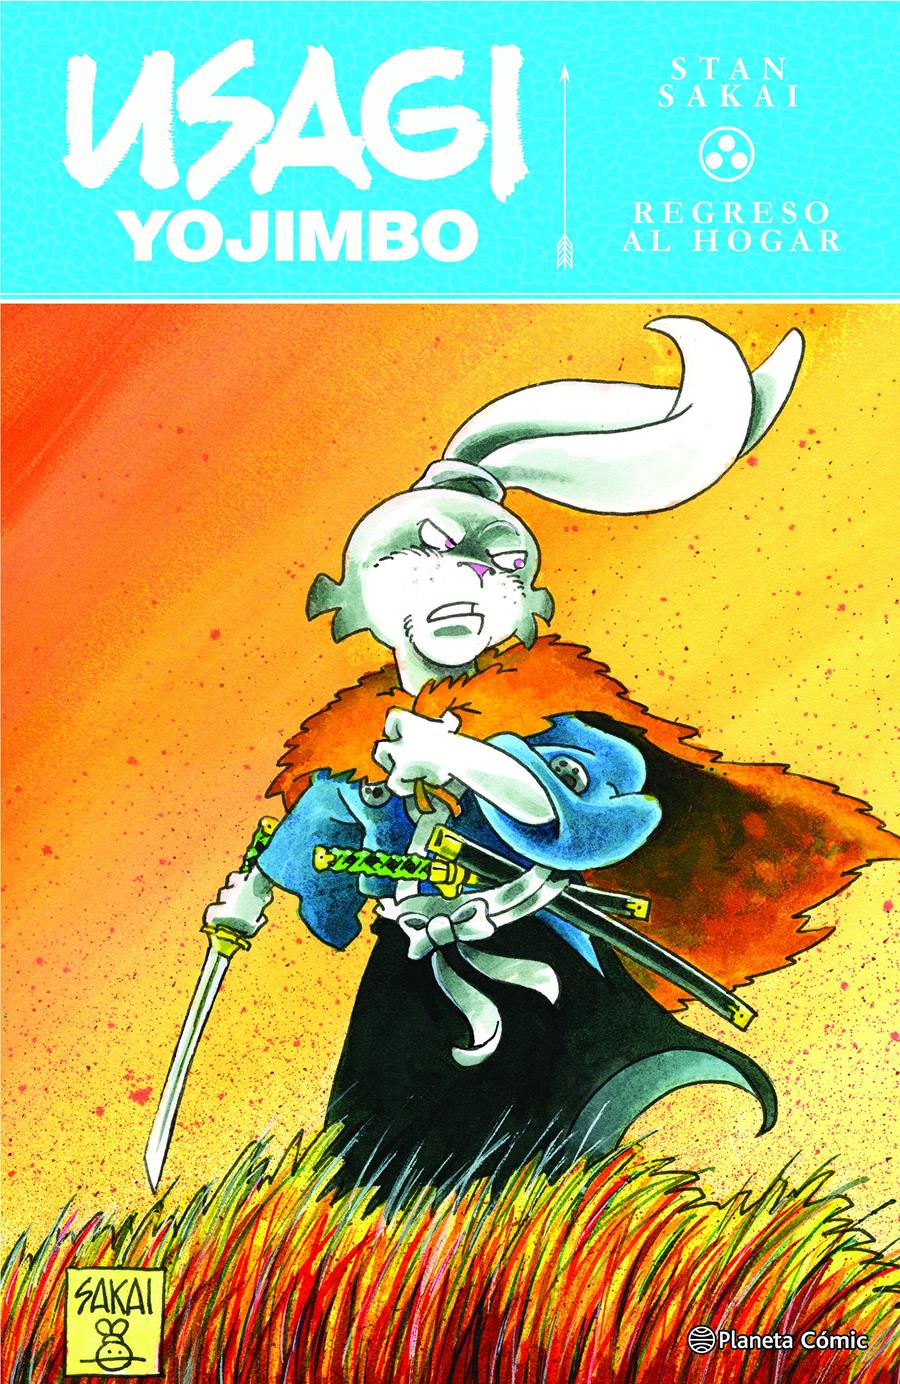 Usagi Yojimbo IDW nº 02. Regreso al hogar | N0122-PLA36 | Stan Sakai | Terra de Còmic - Tu tienda de cómics online especializada en cómics, manga y merchandising